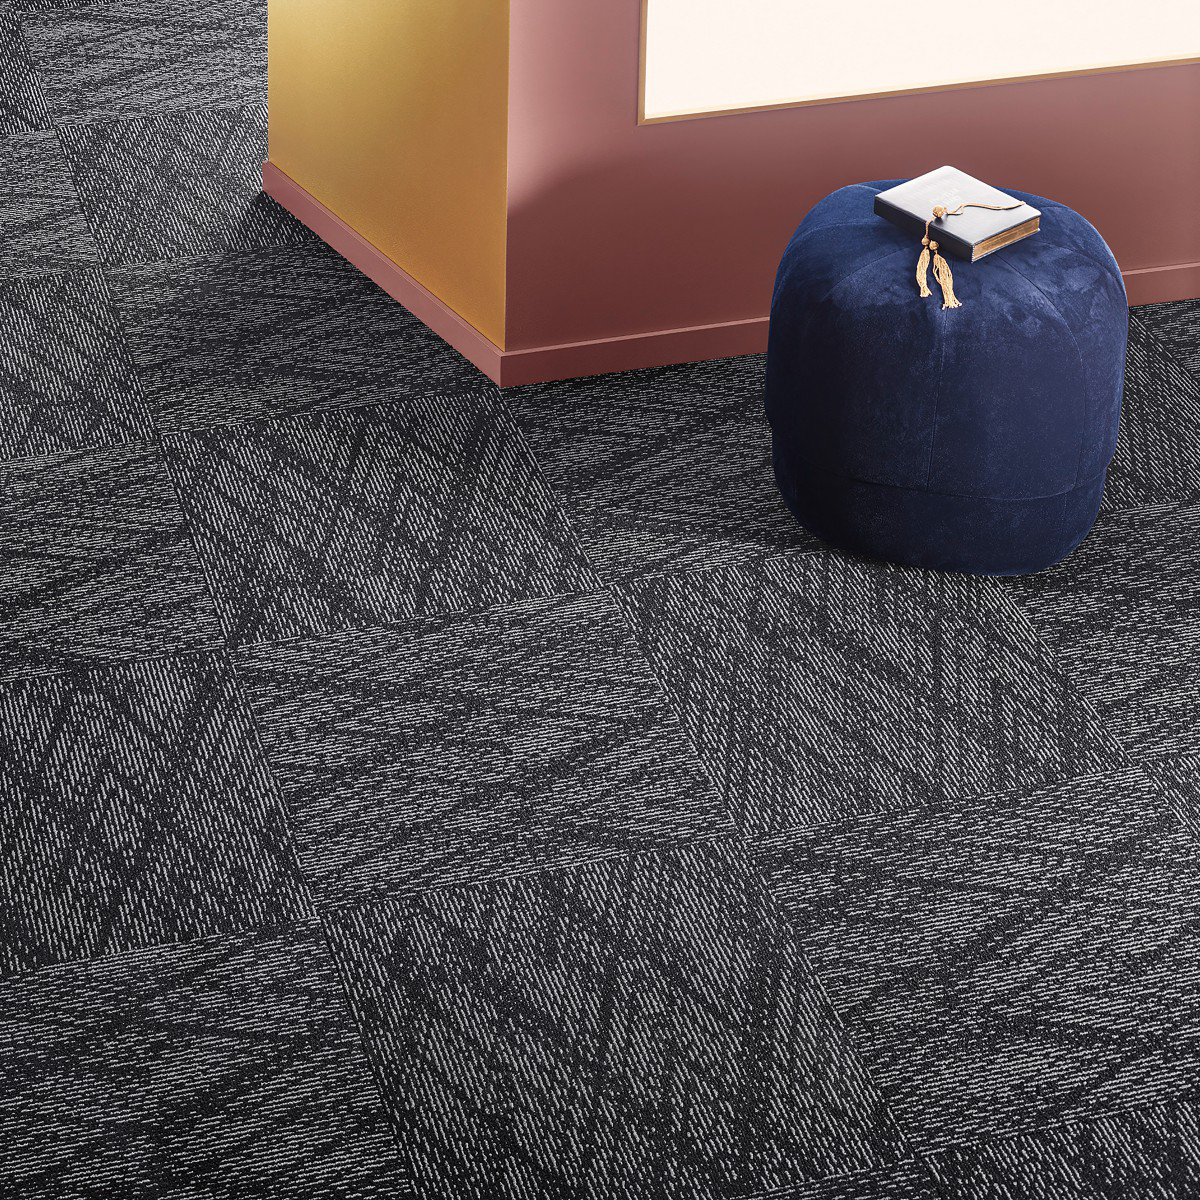 Superior 1051 D1062 Carpet Tile by Vorwerk & Co Teppichwerke GmbH & Co KG